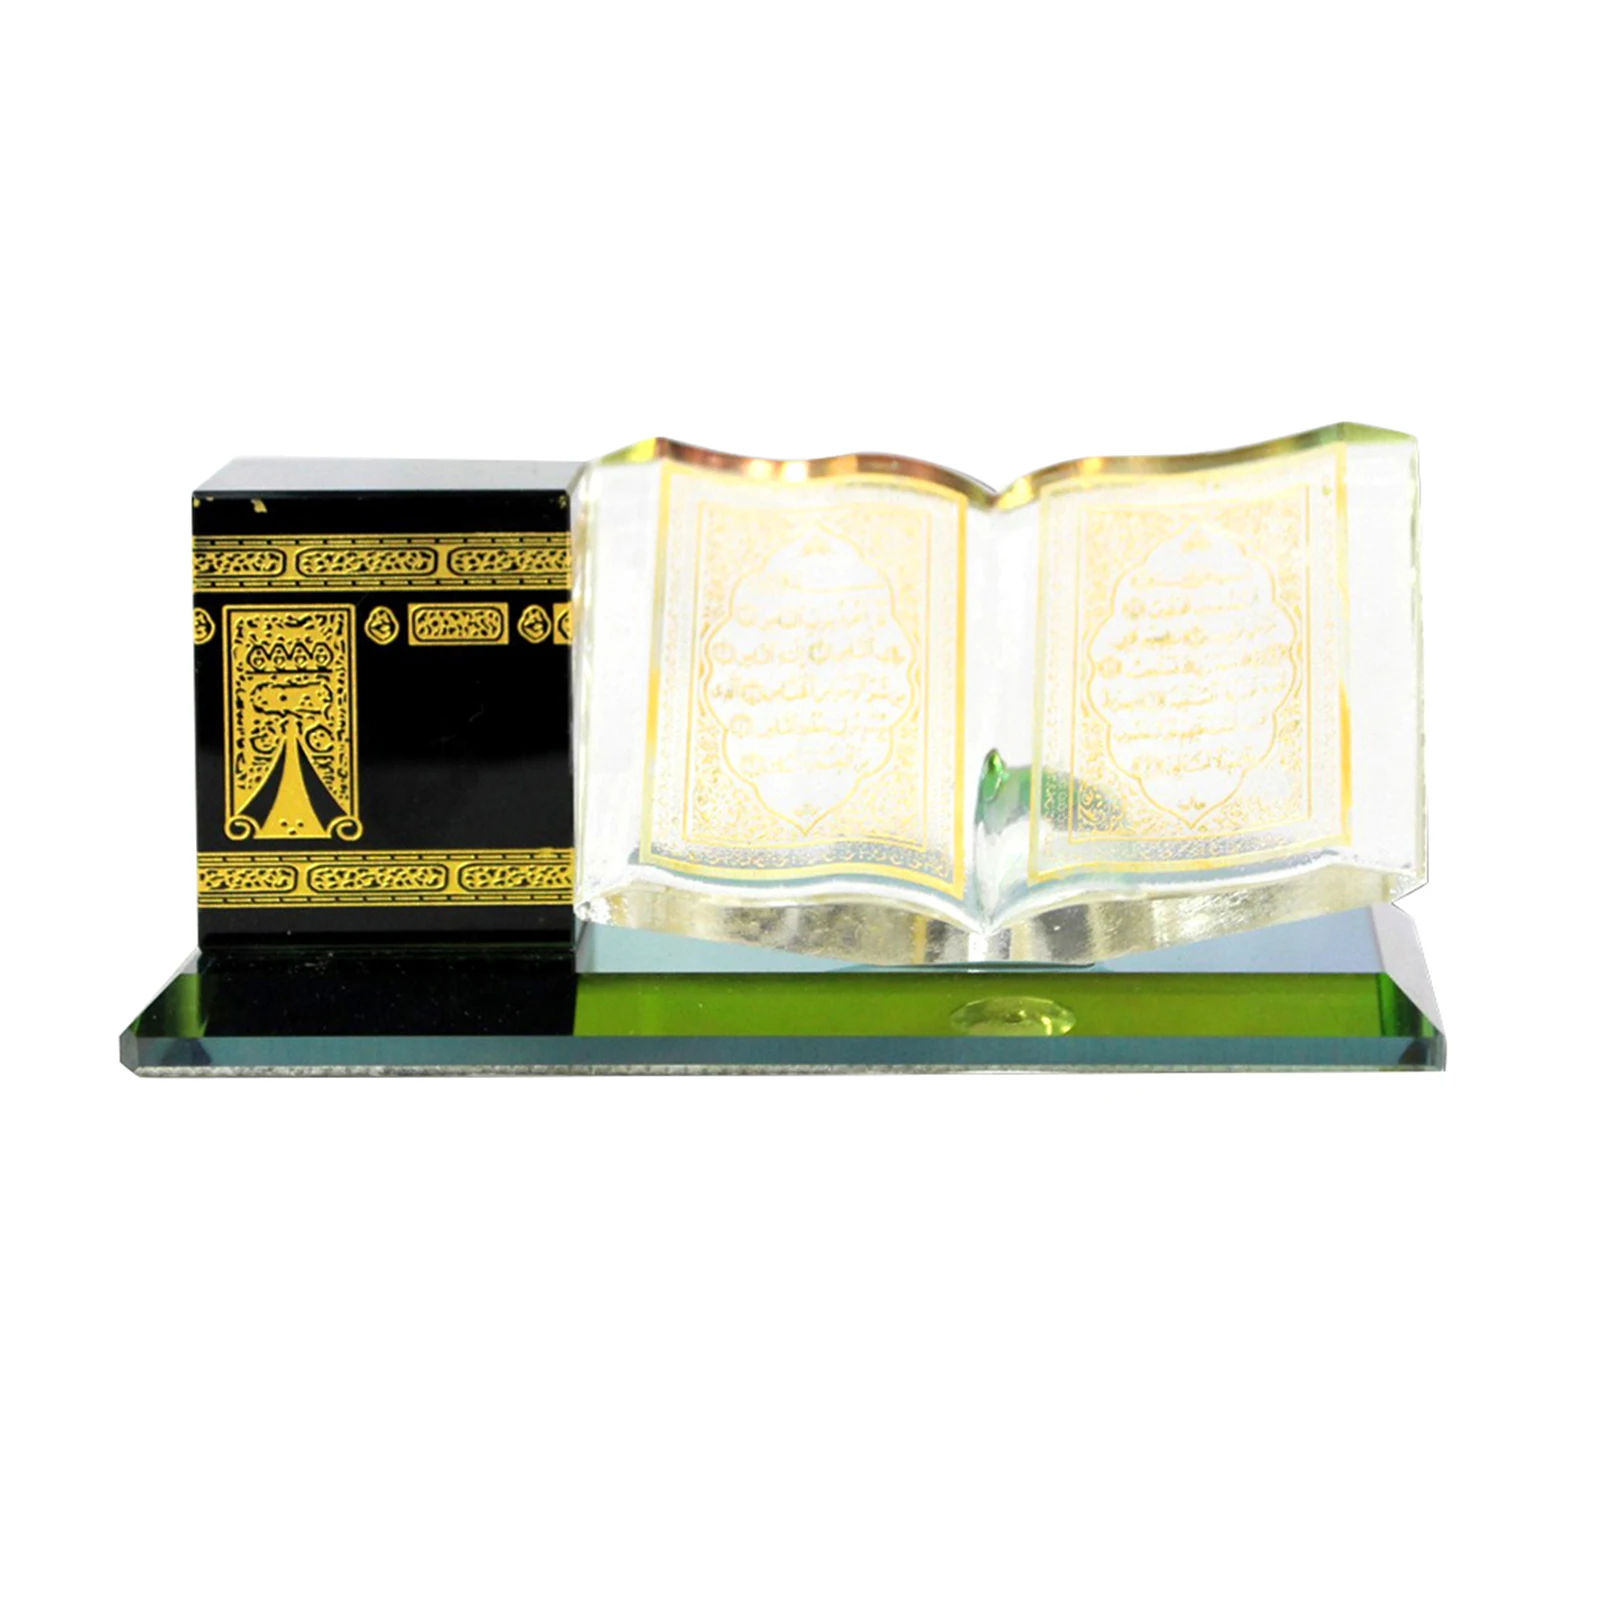 Desktop Office Islamic Building Car Kaaba Model Muslim Crystal Figurines Bedroom Handicrafts Gift Collectible Home Decor